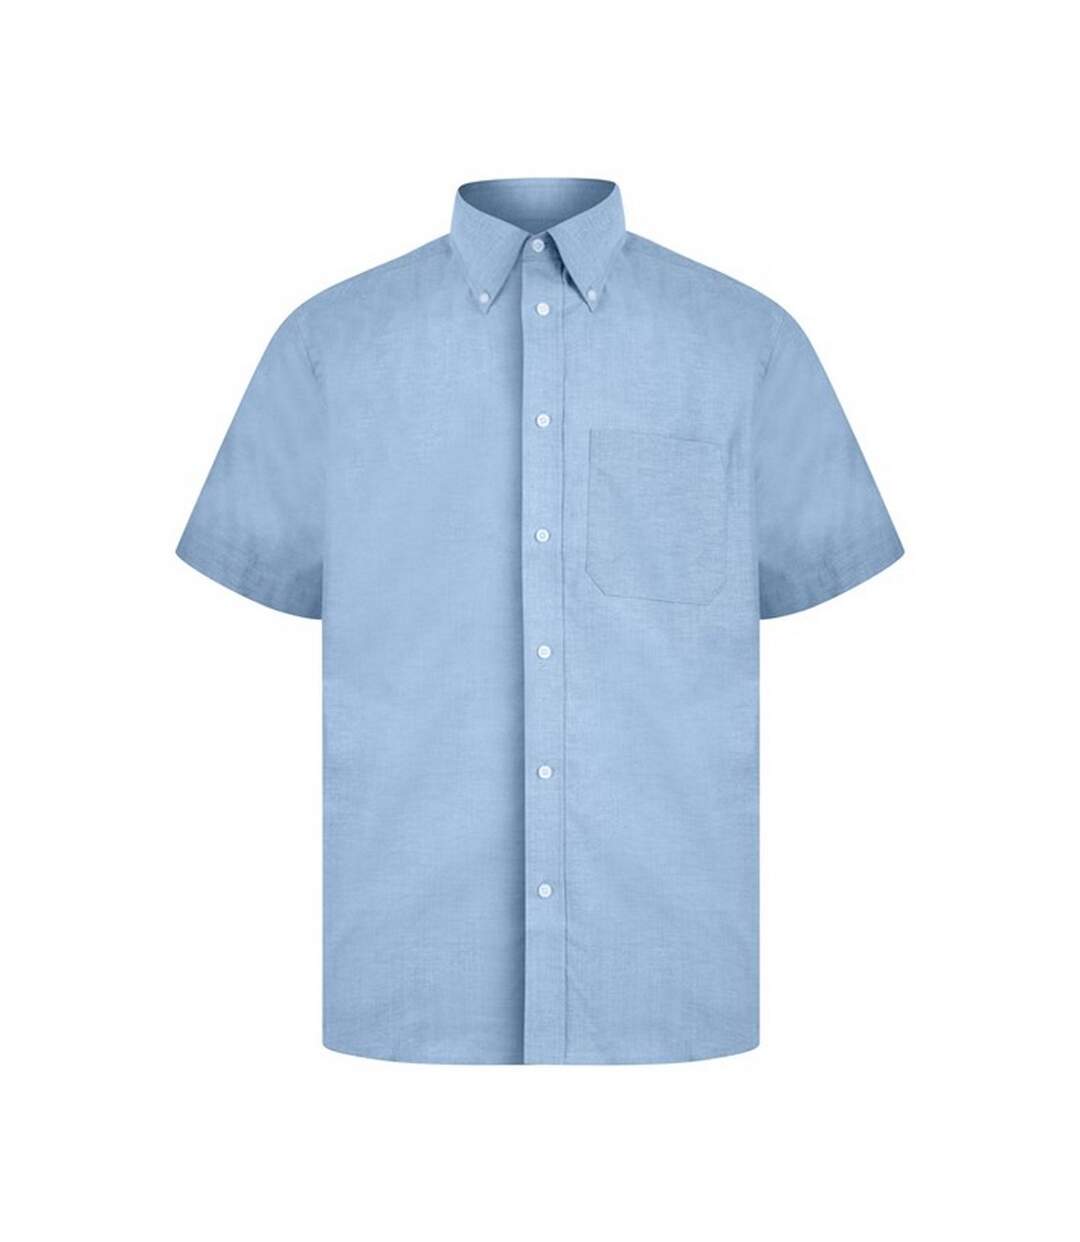 Absolute Apparel Mens Short Sleeved Oxford Shirt (Light Blue) - UTAB120